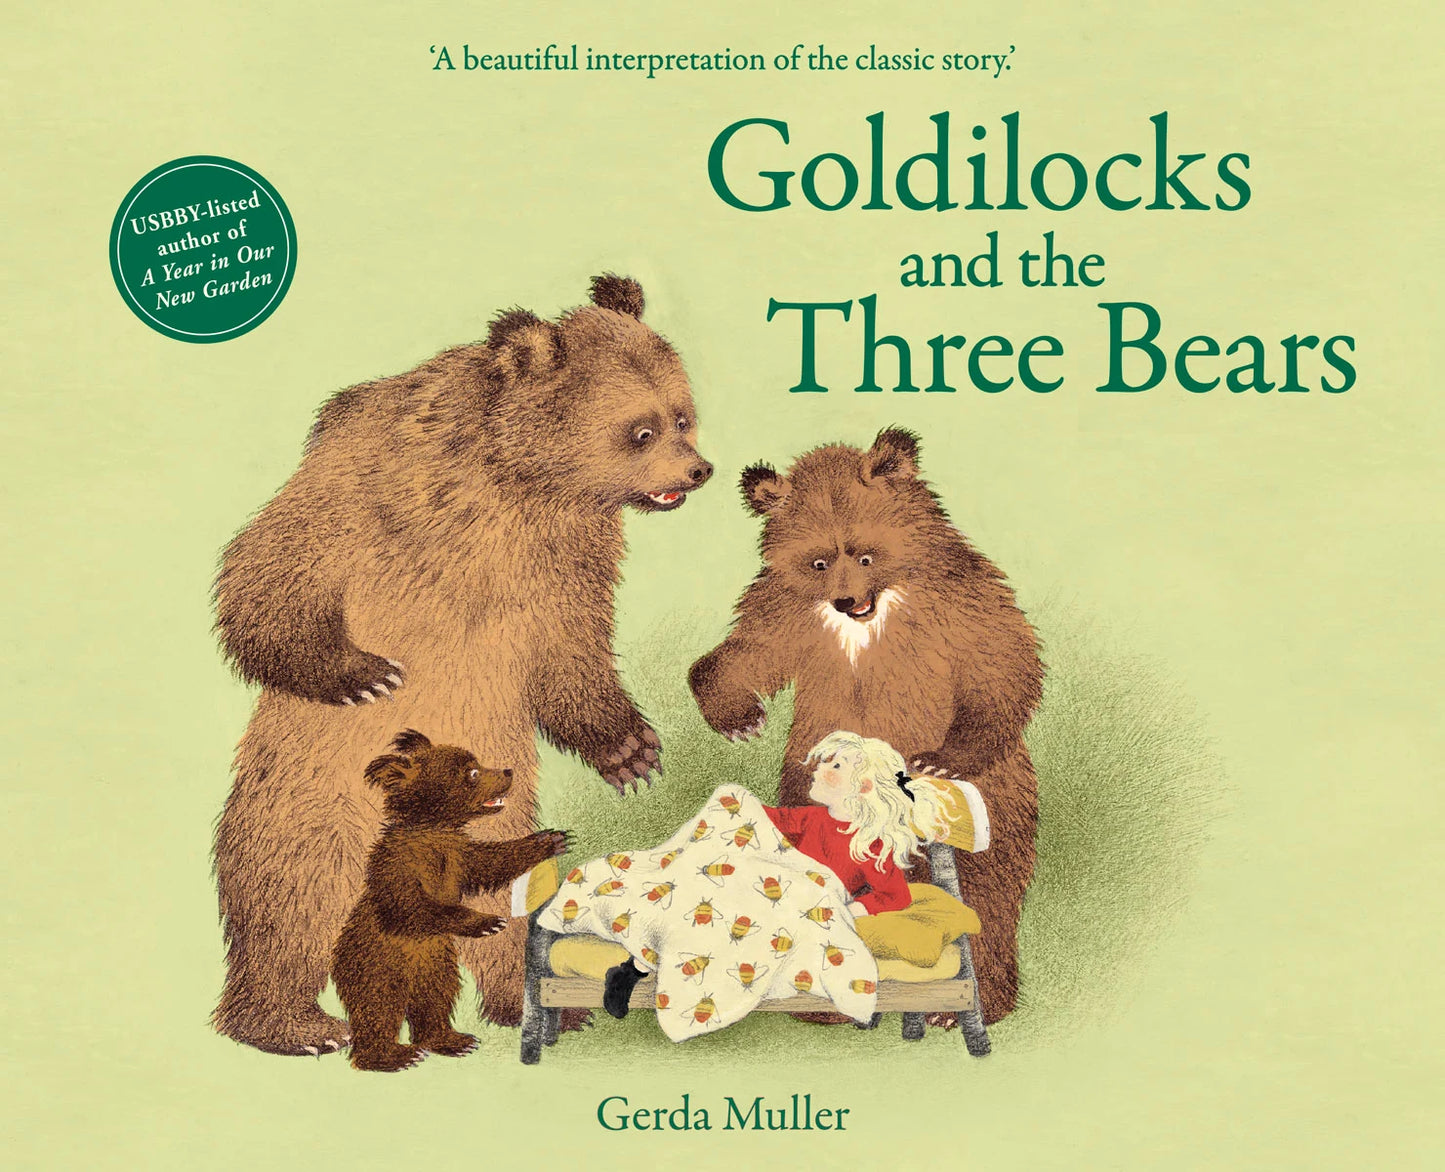 Goldilocks and the Three Bears by Gerda Miller - Alder & Alouette